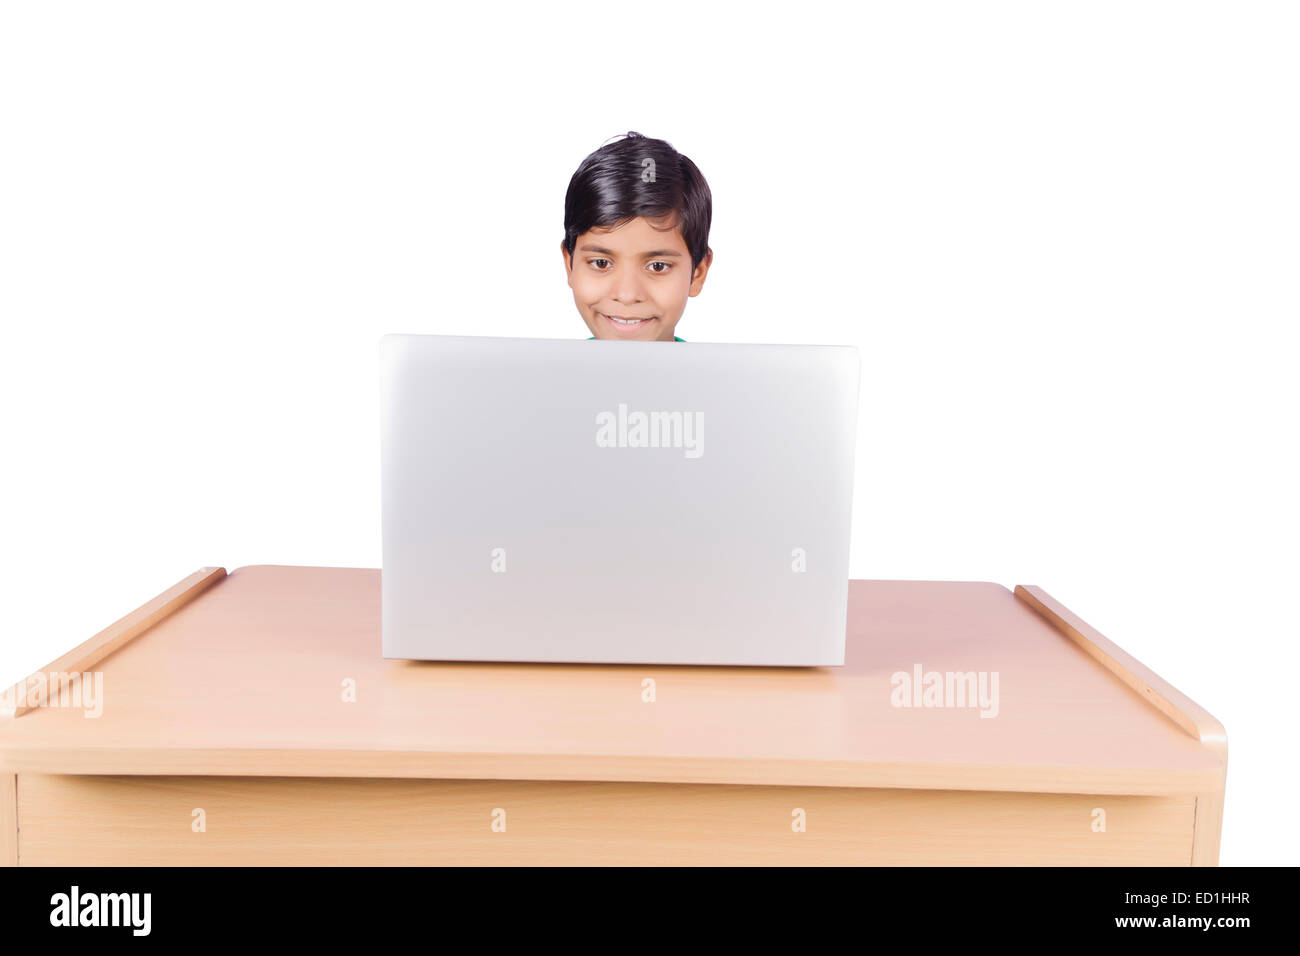 1 indian child boy student laptop working Stock Photo